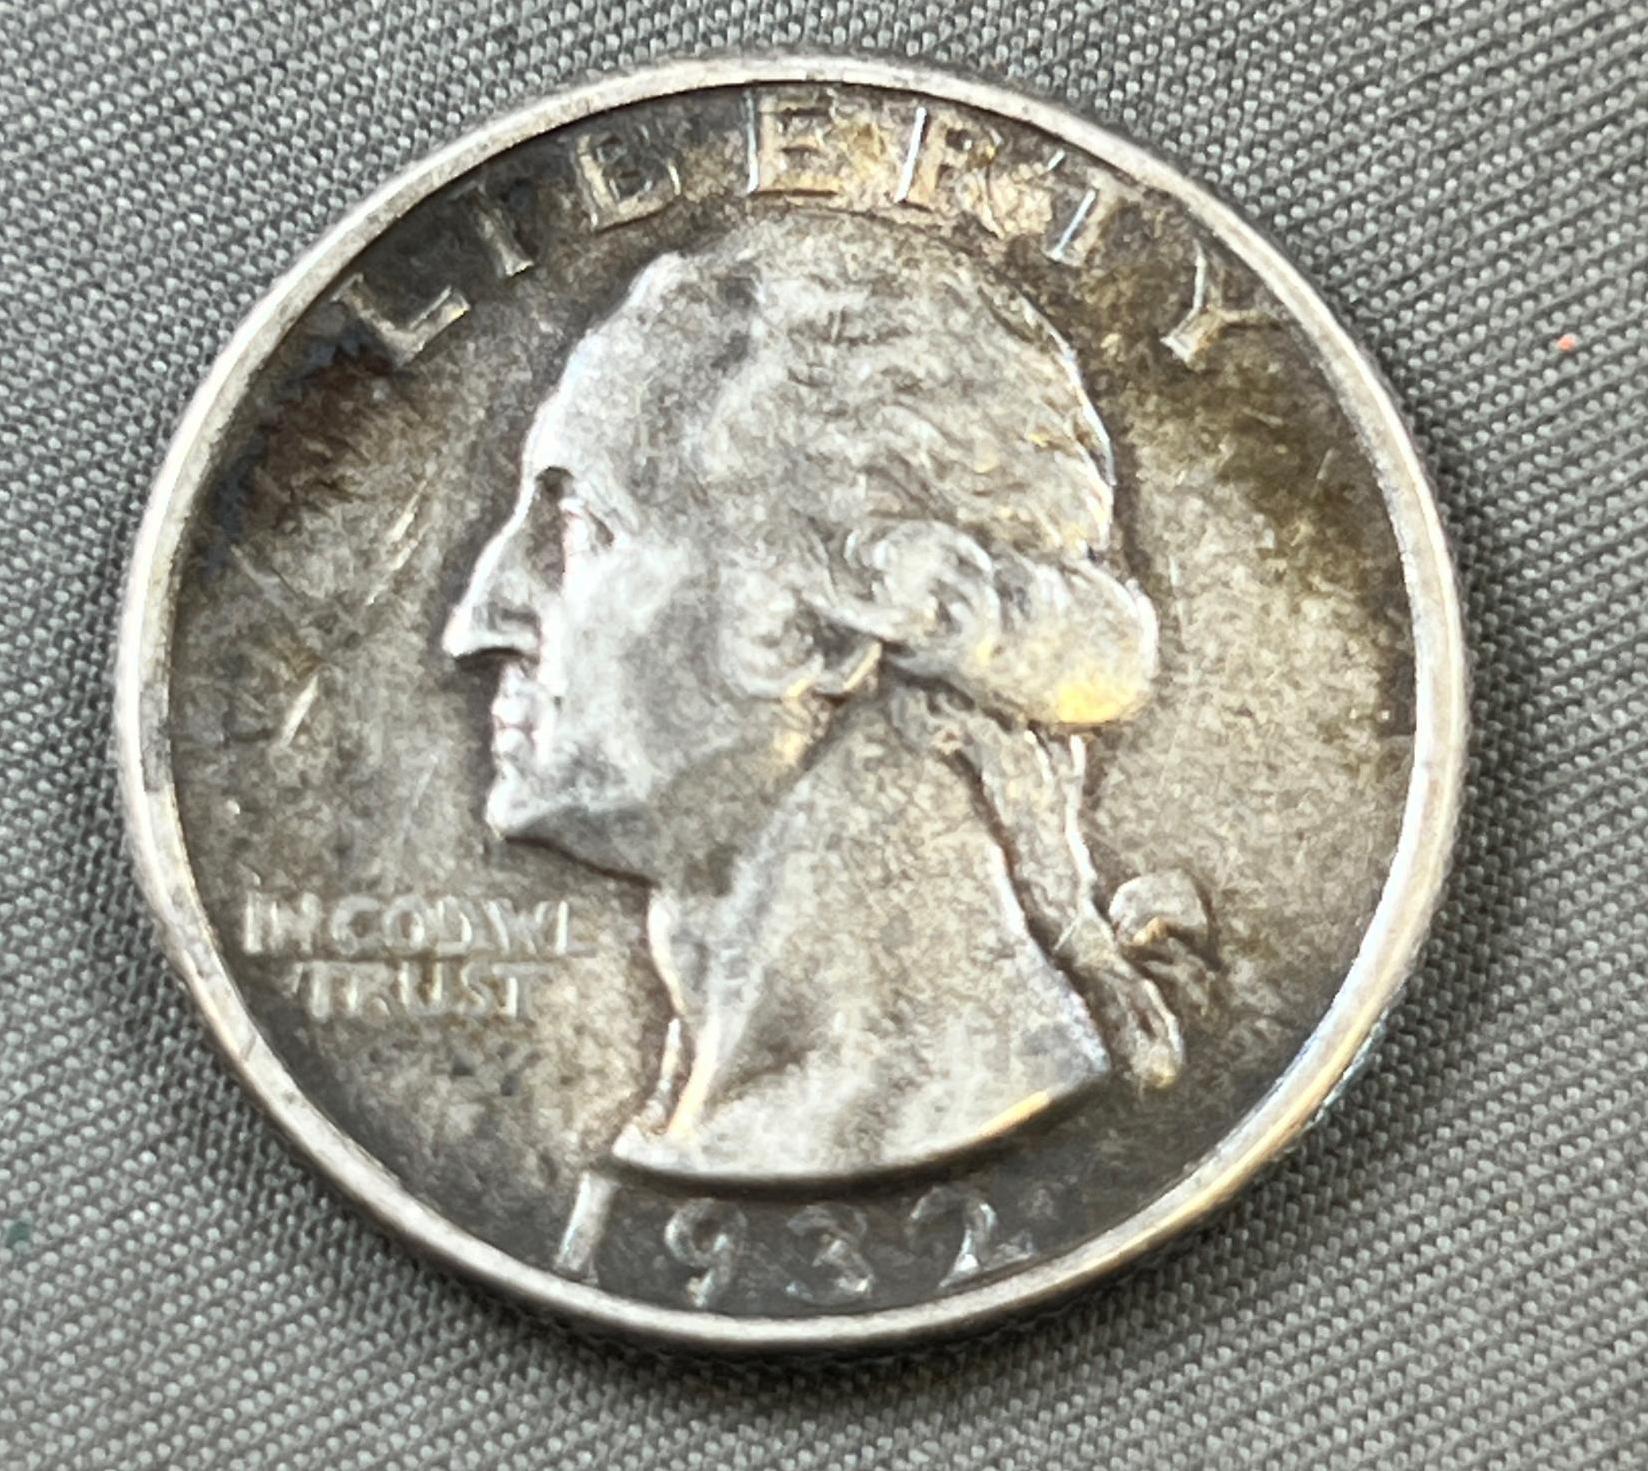 1932 US Washington Quarter, 90% silver